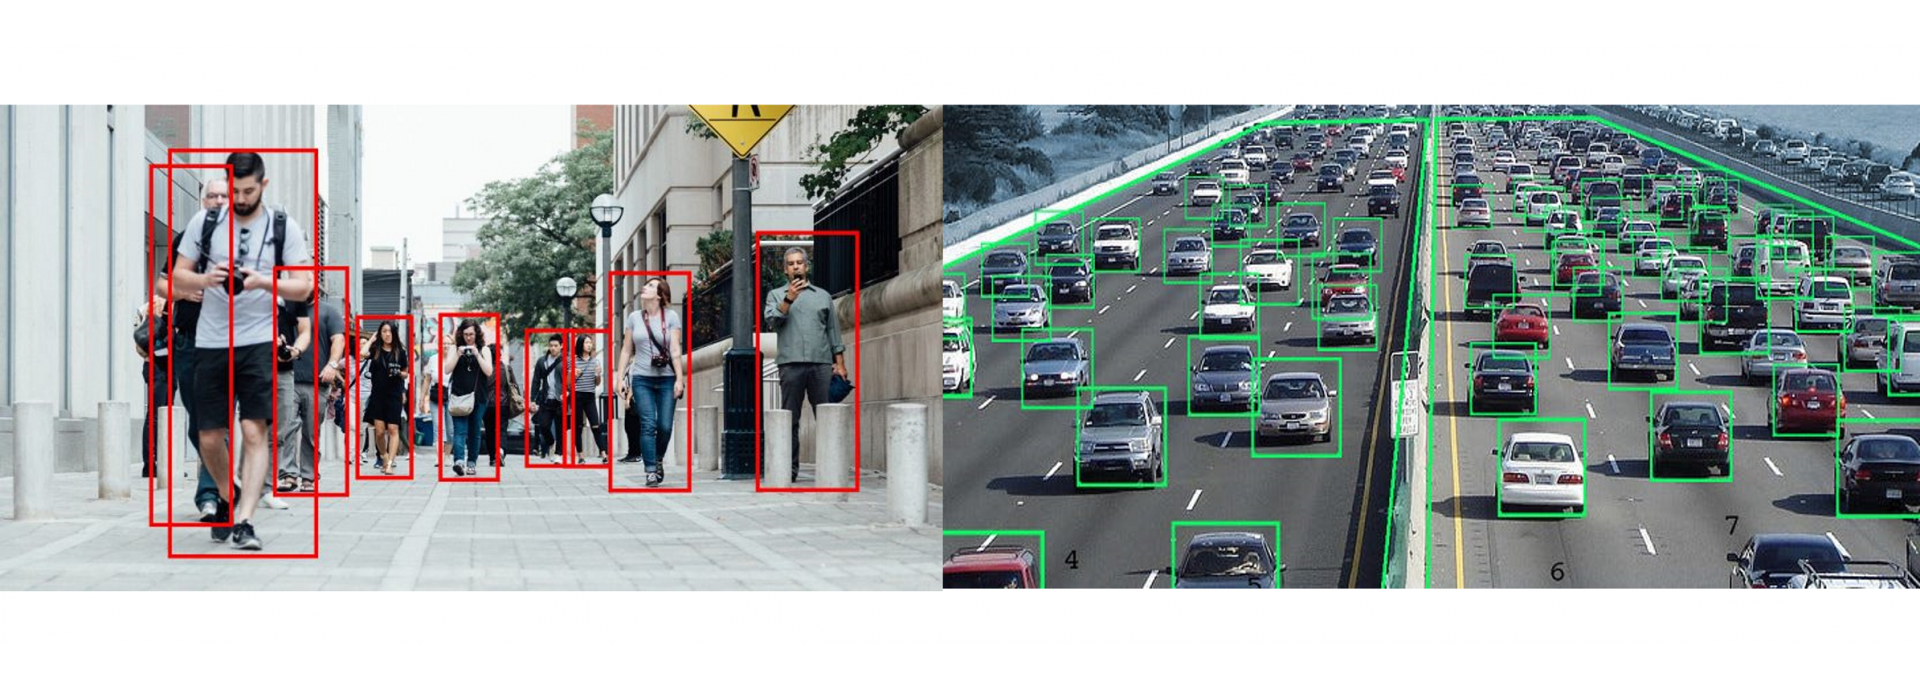 IP Camera Smart AI feature - Smart Human/vehicle detection